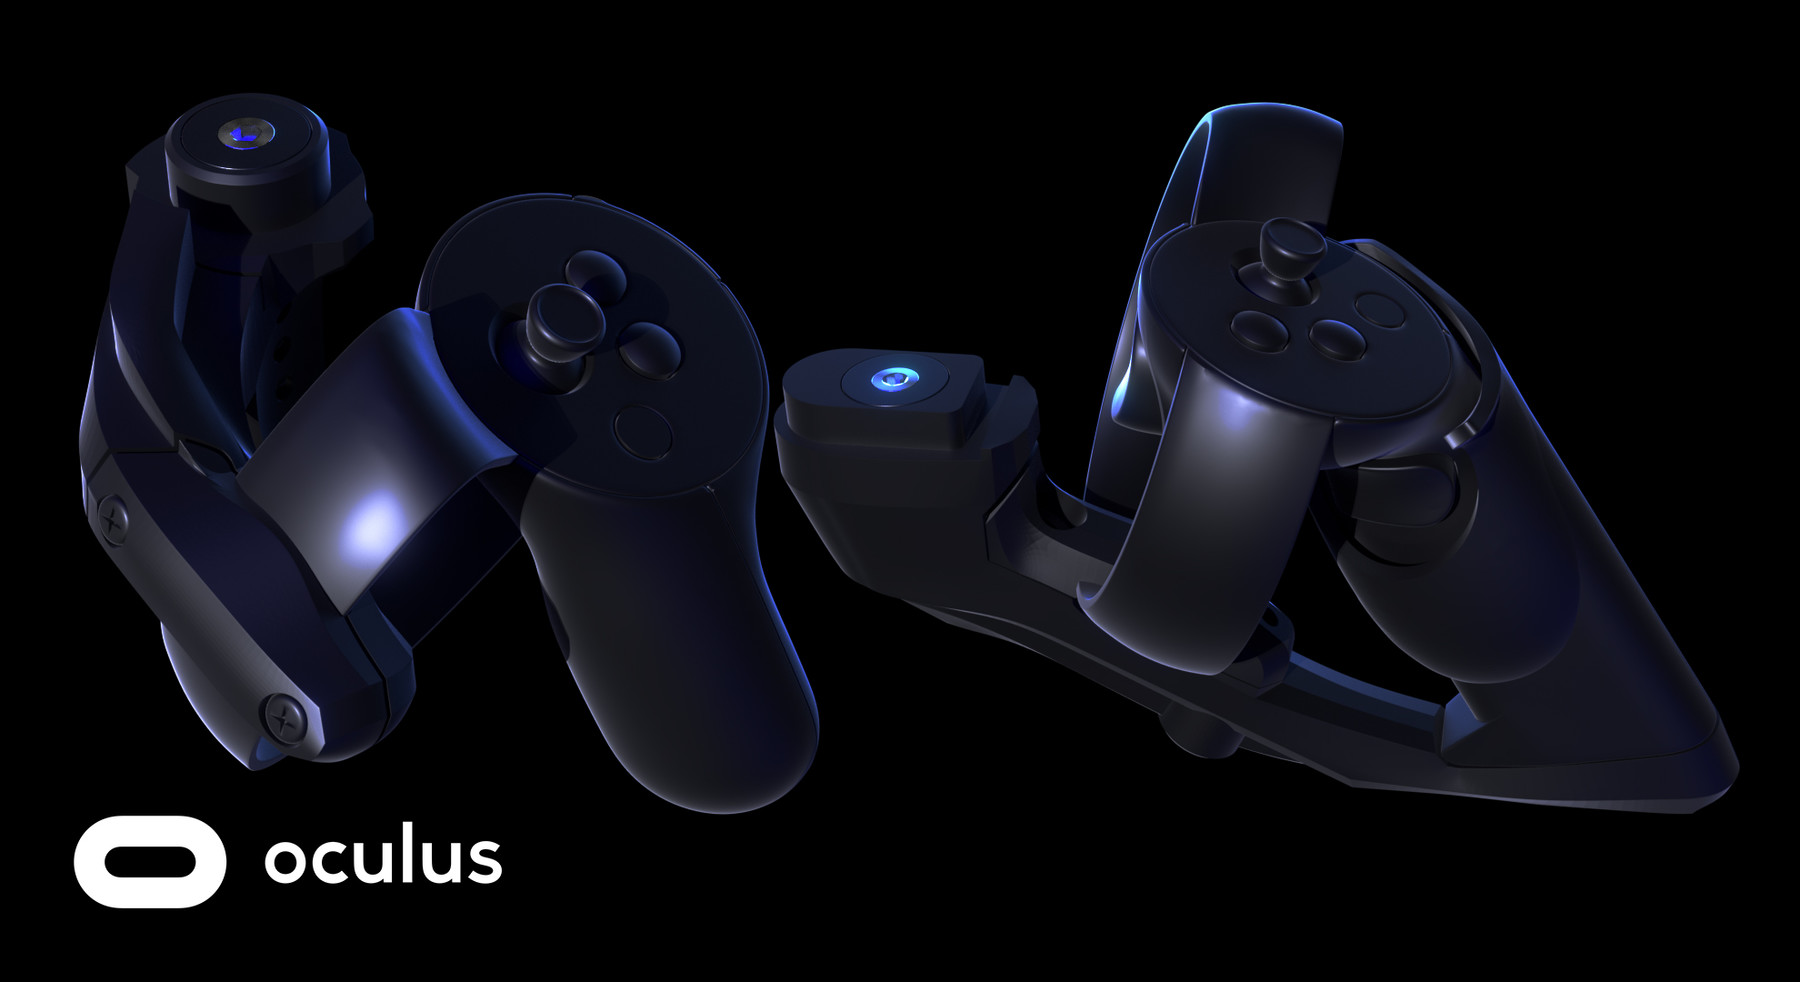 oculus joystick